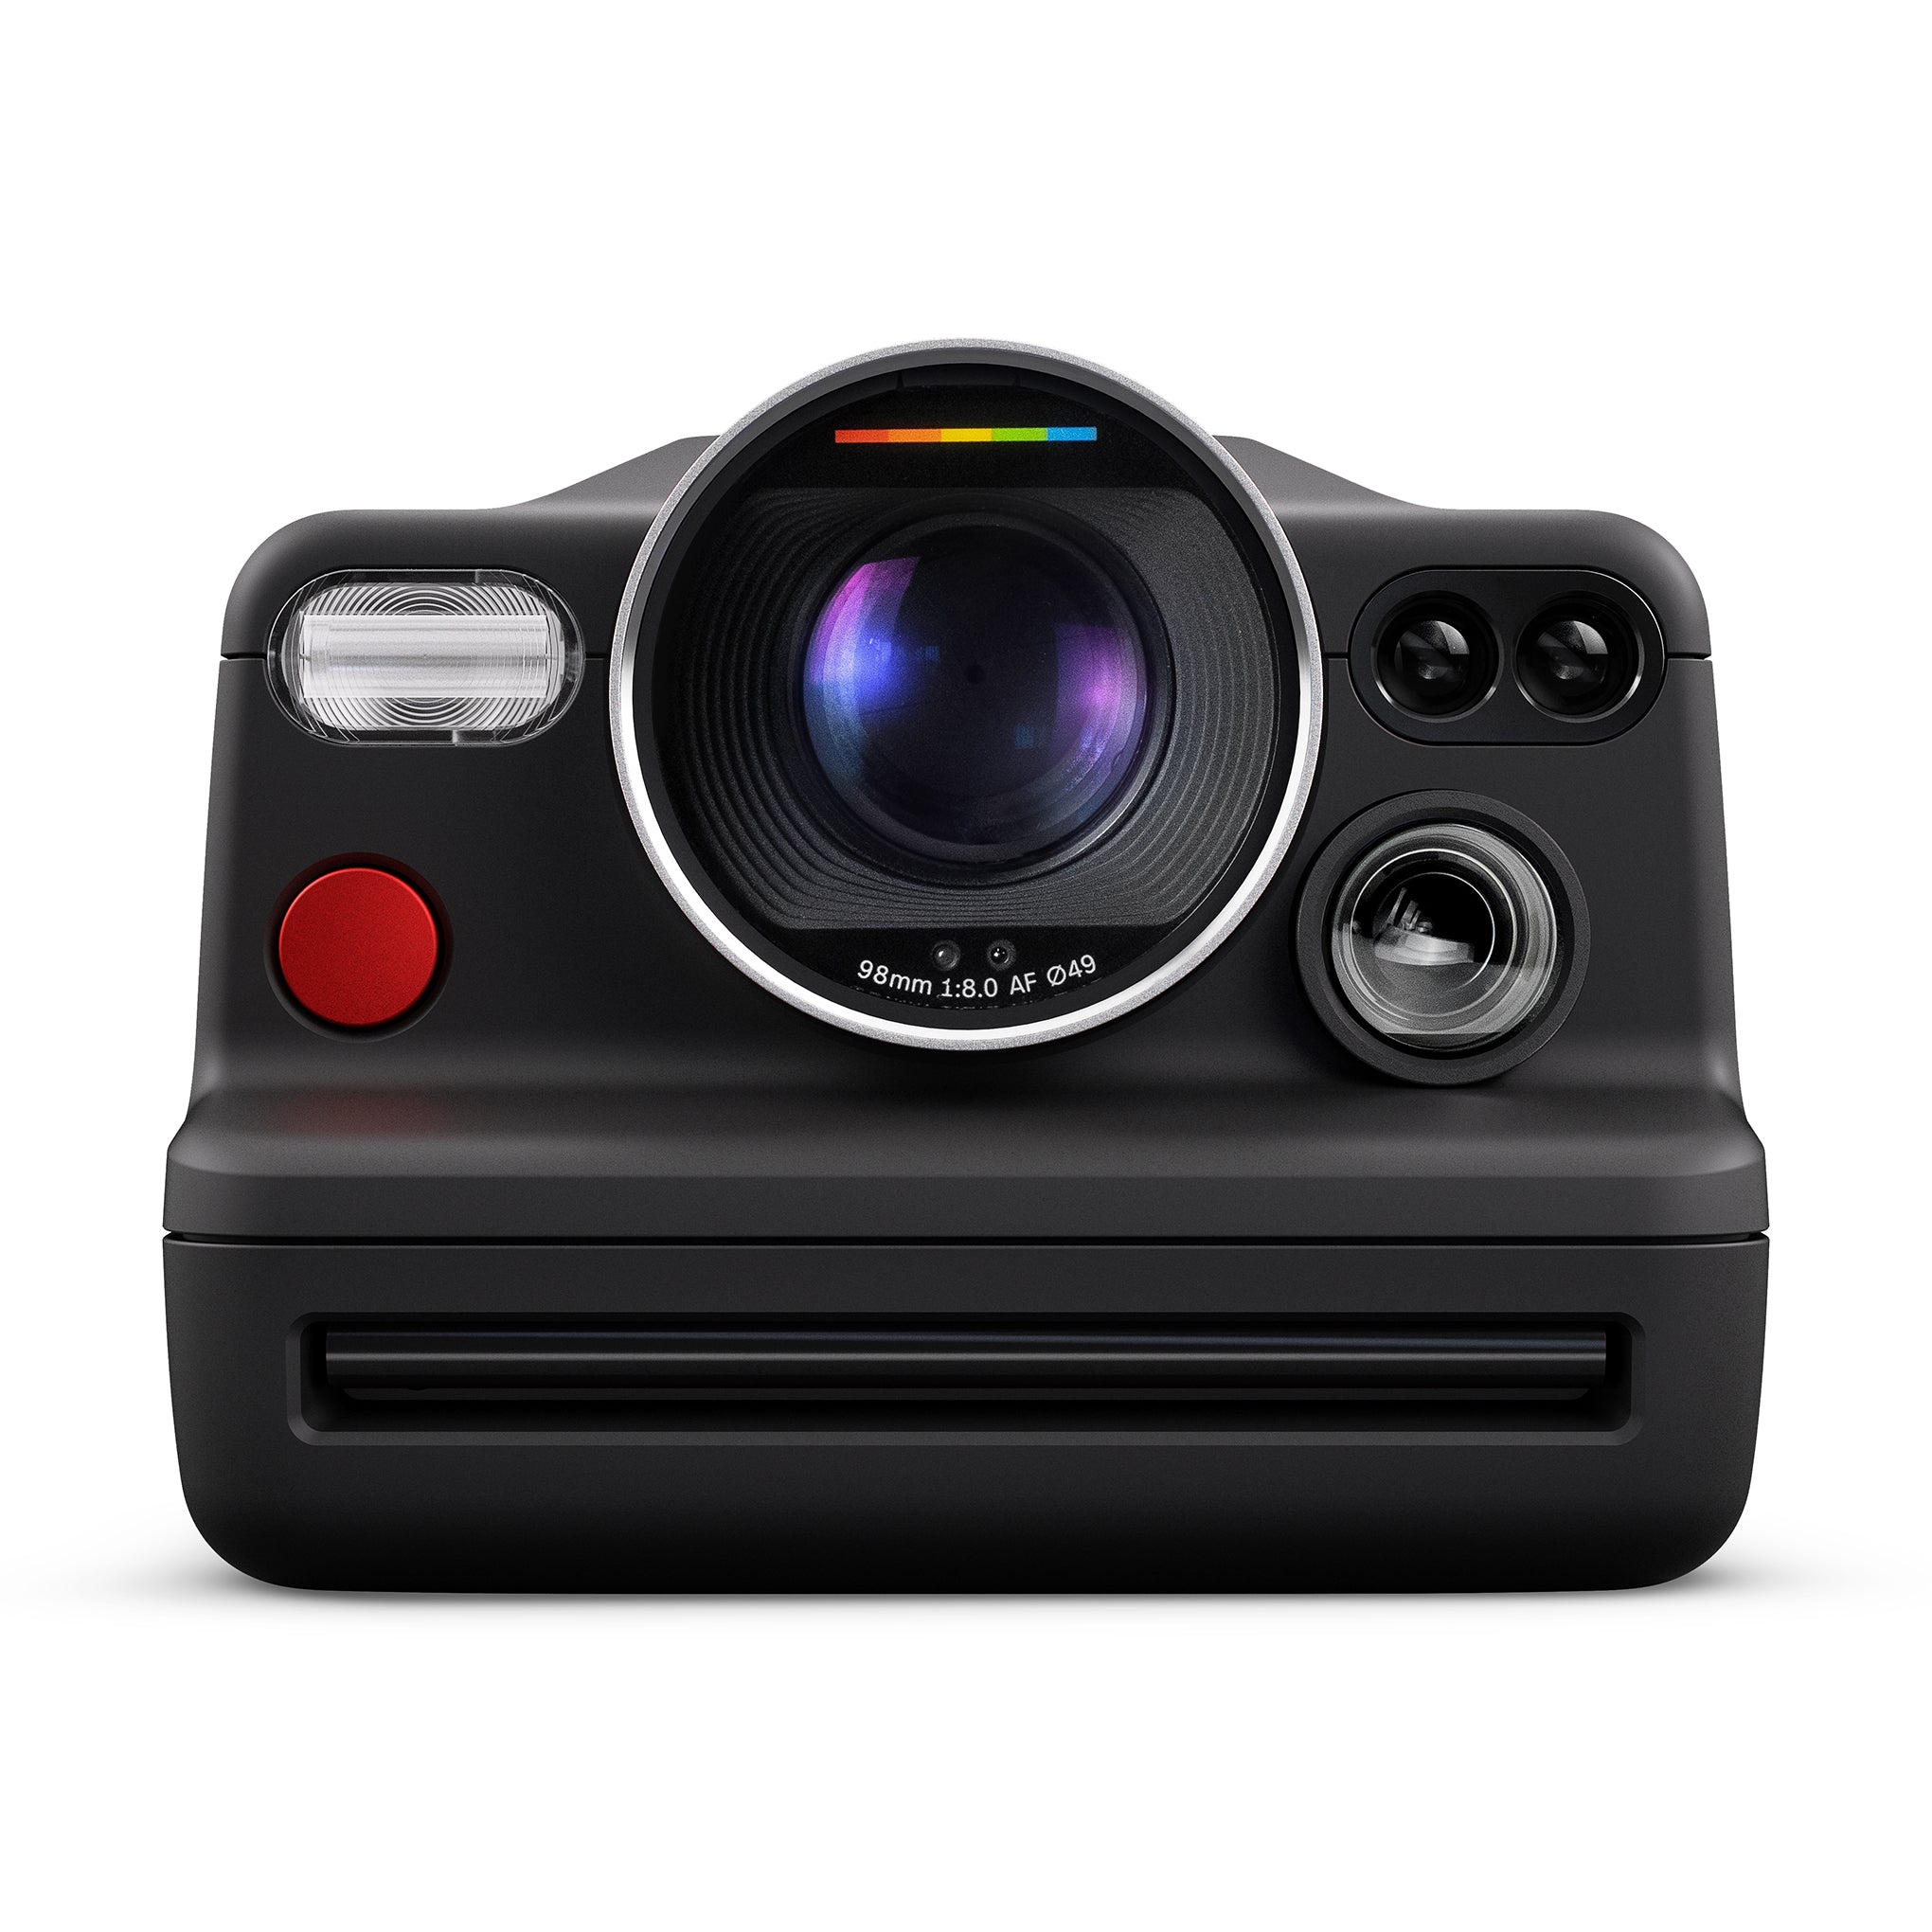 Polaroid - Now i-Type Camera The Mandalorian Edition